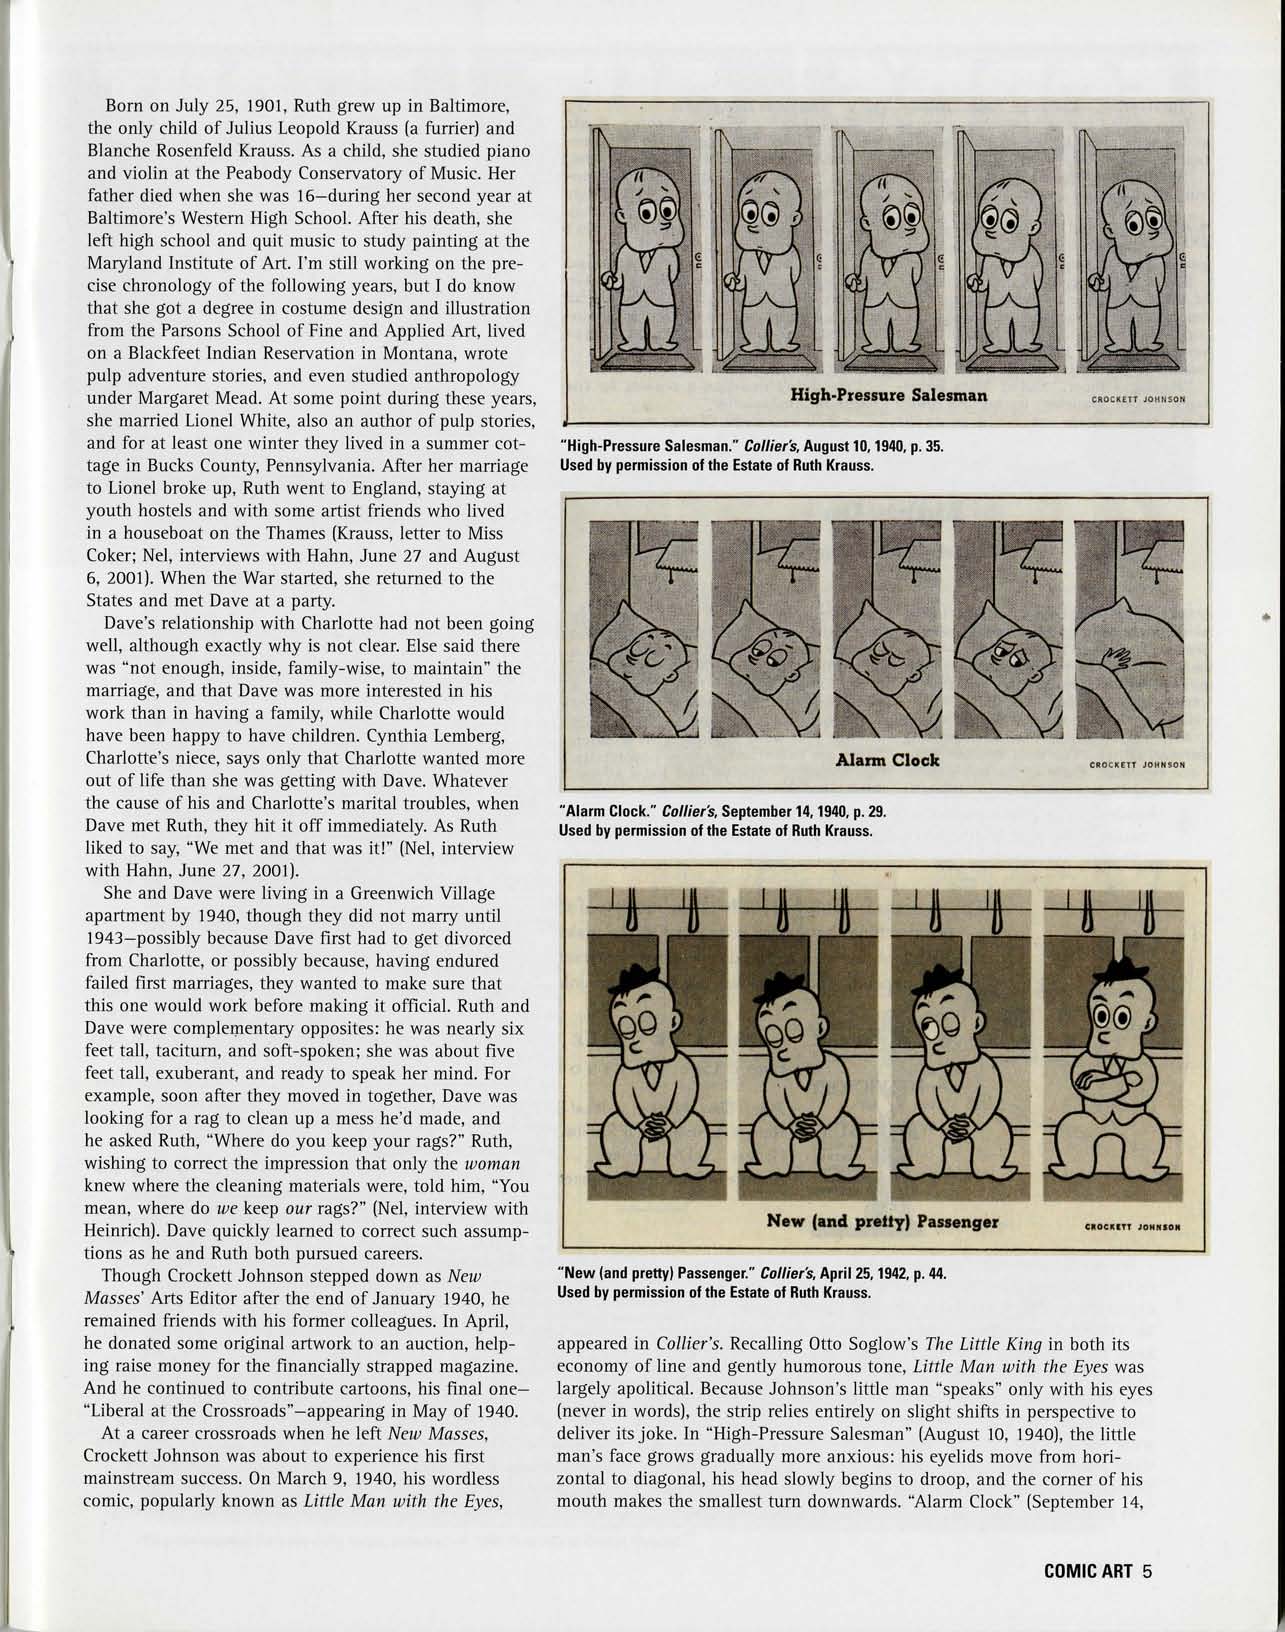 Philip Nel, "Crockett Johnson and the Purple Crayon: A Life in Art," Comic Art 5 (Winter 2004), p. 5